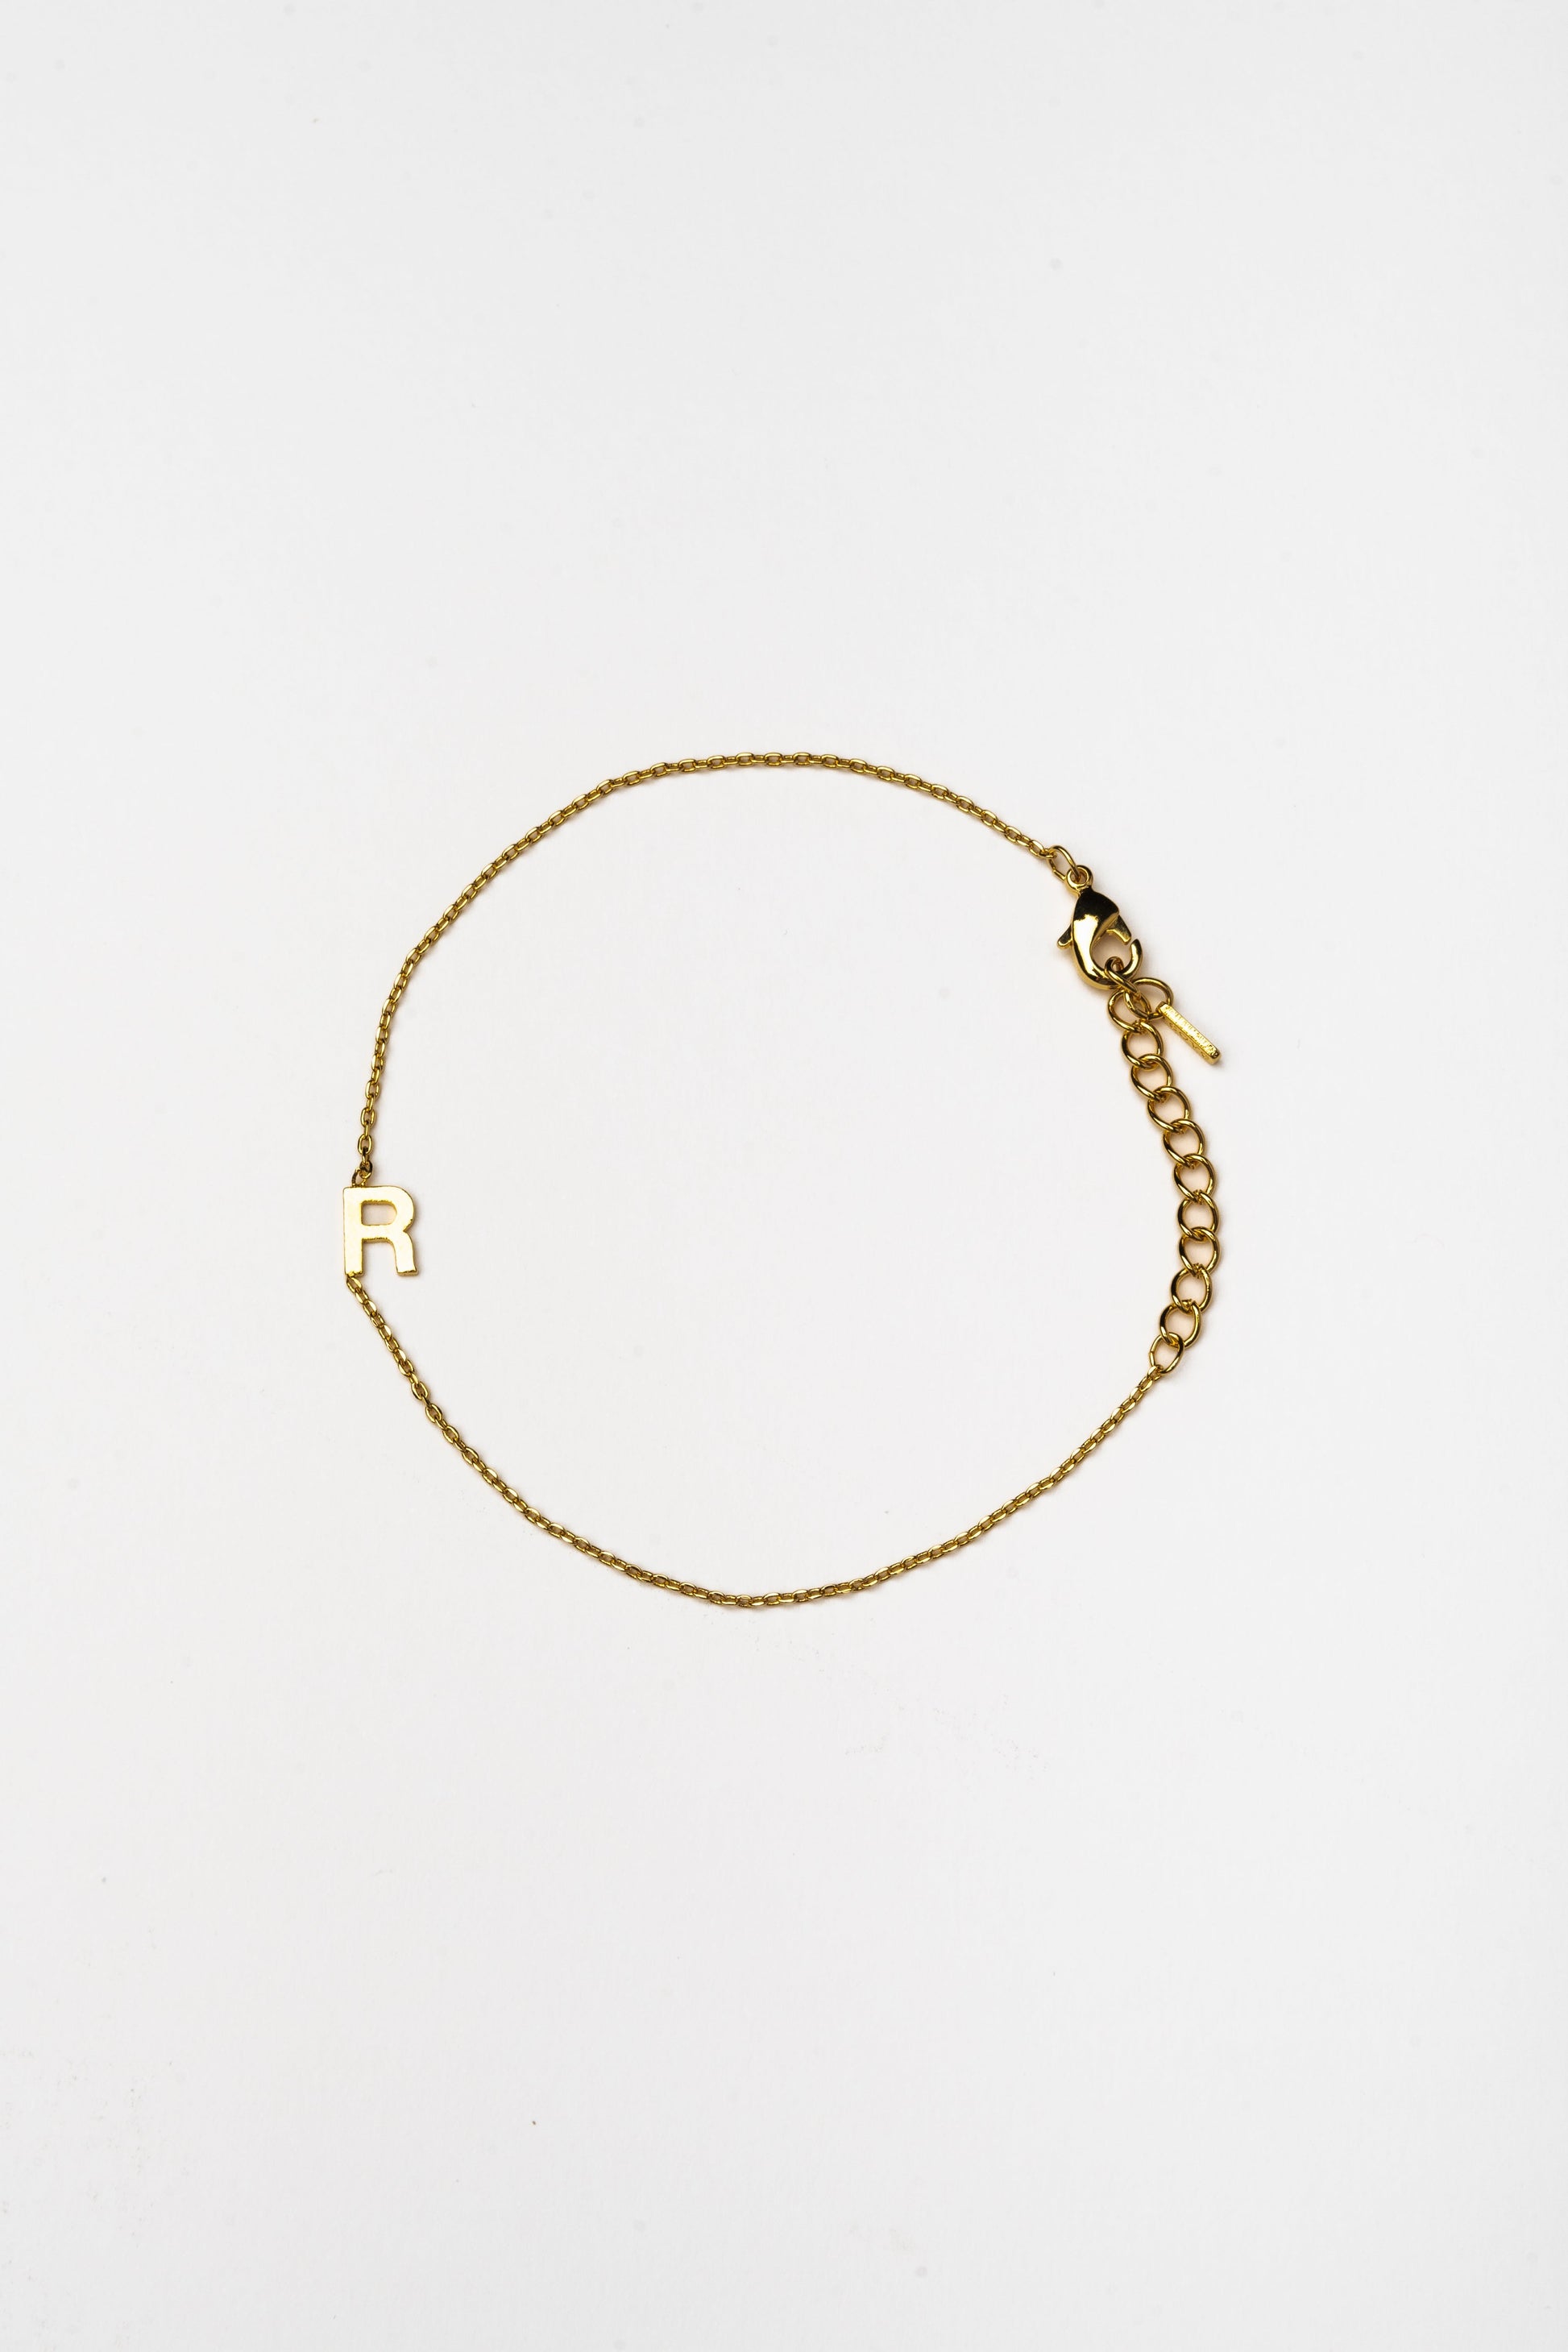 Cove Initial Bracelet WOMEN'S BRACELET Cove Accessories 18k Gold Plated 7" + 1" extender R